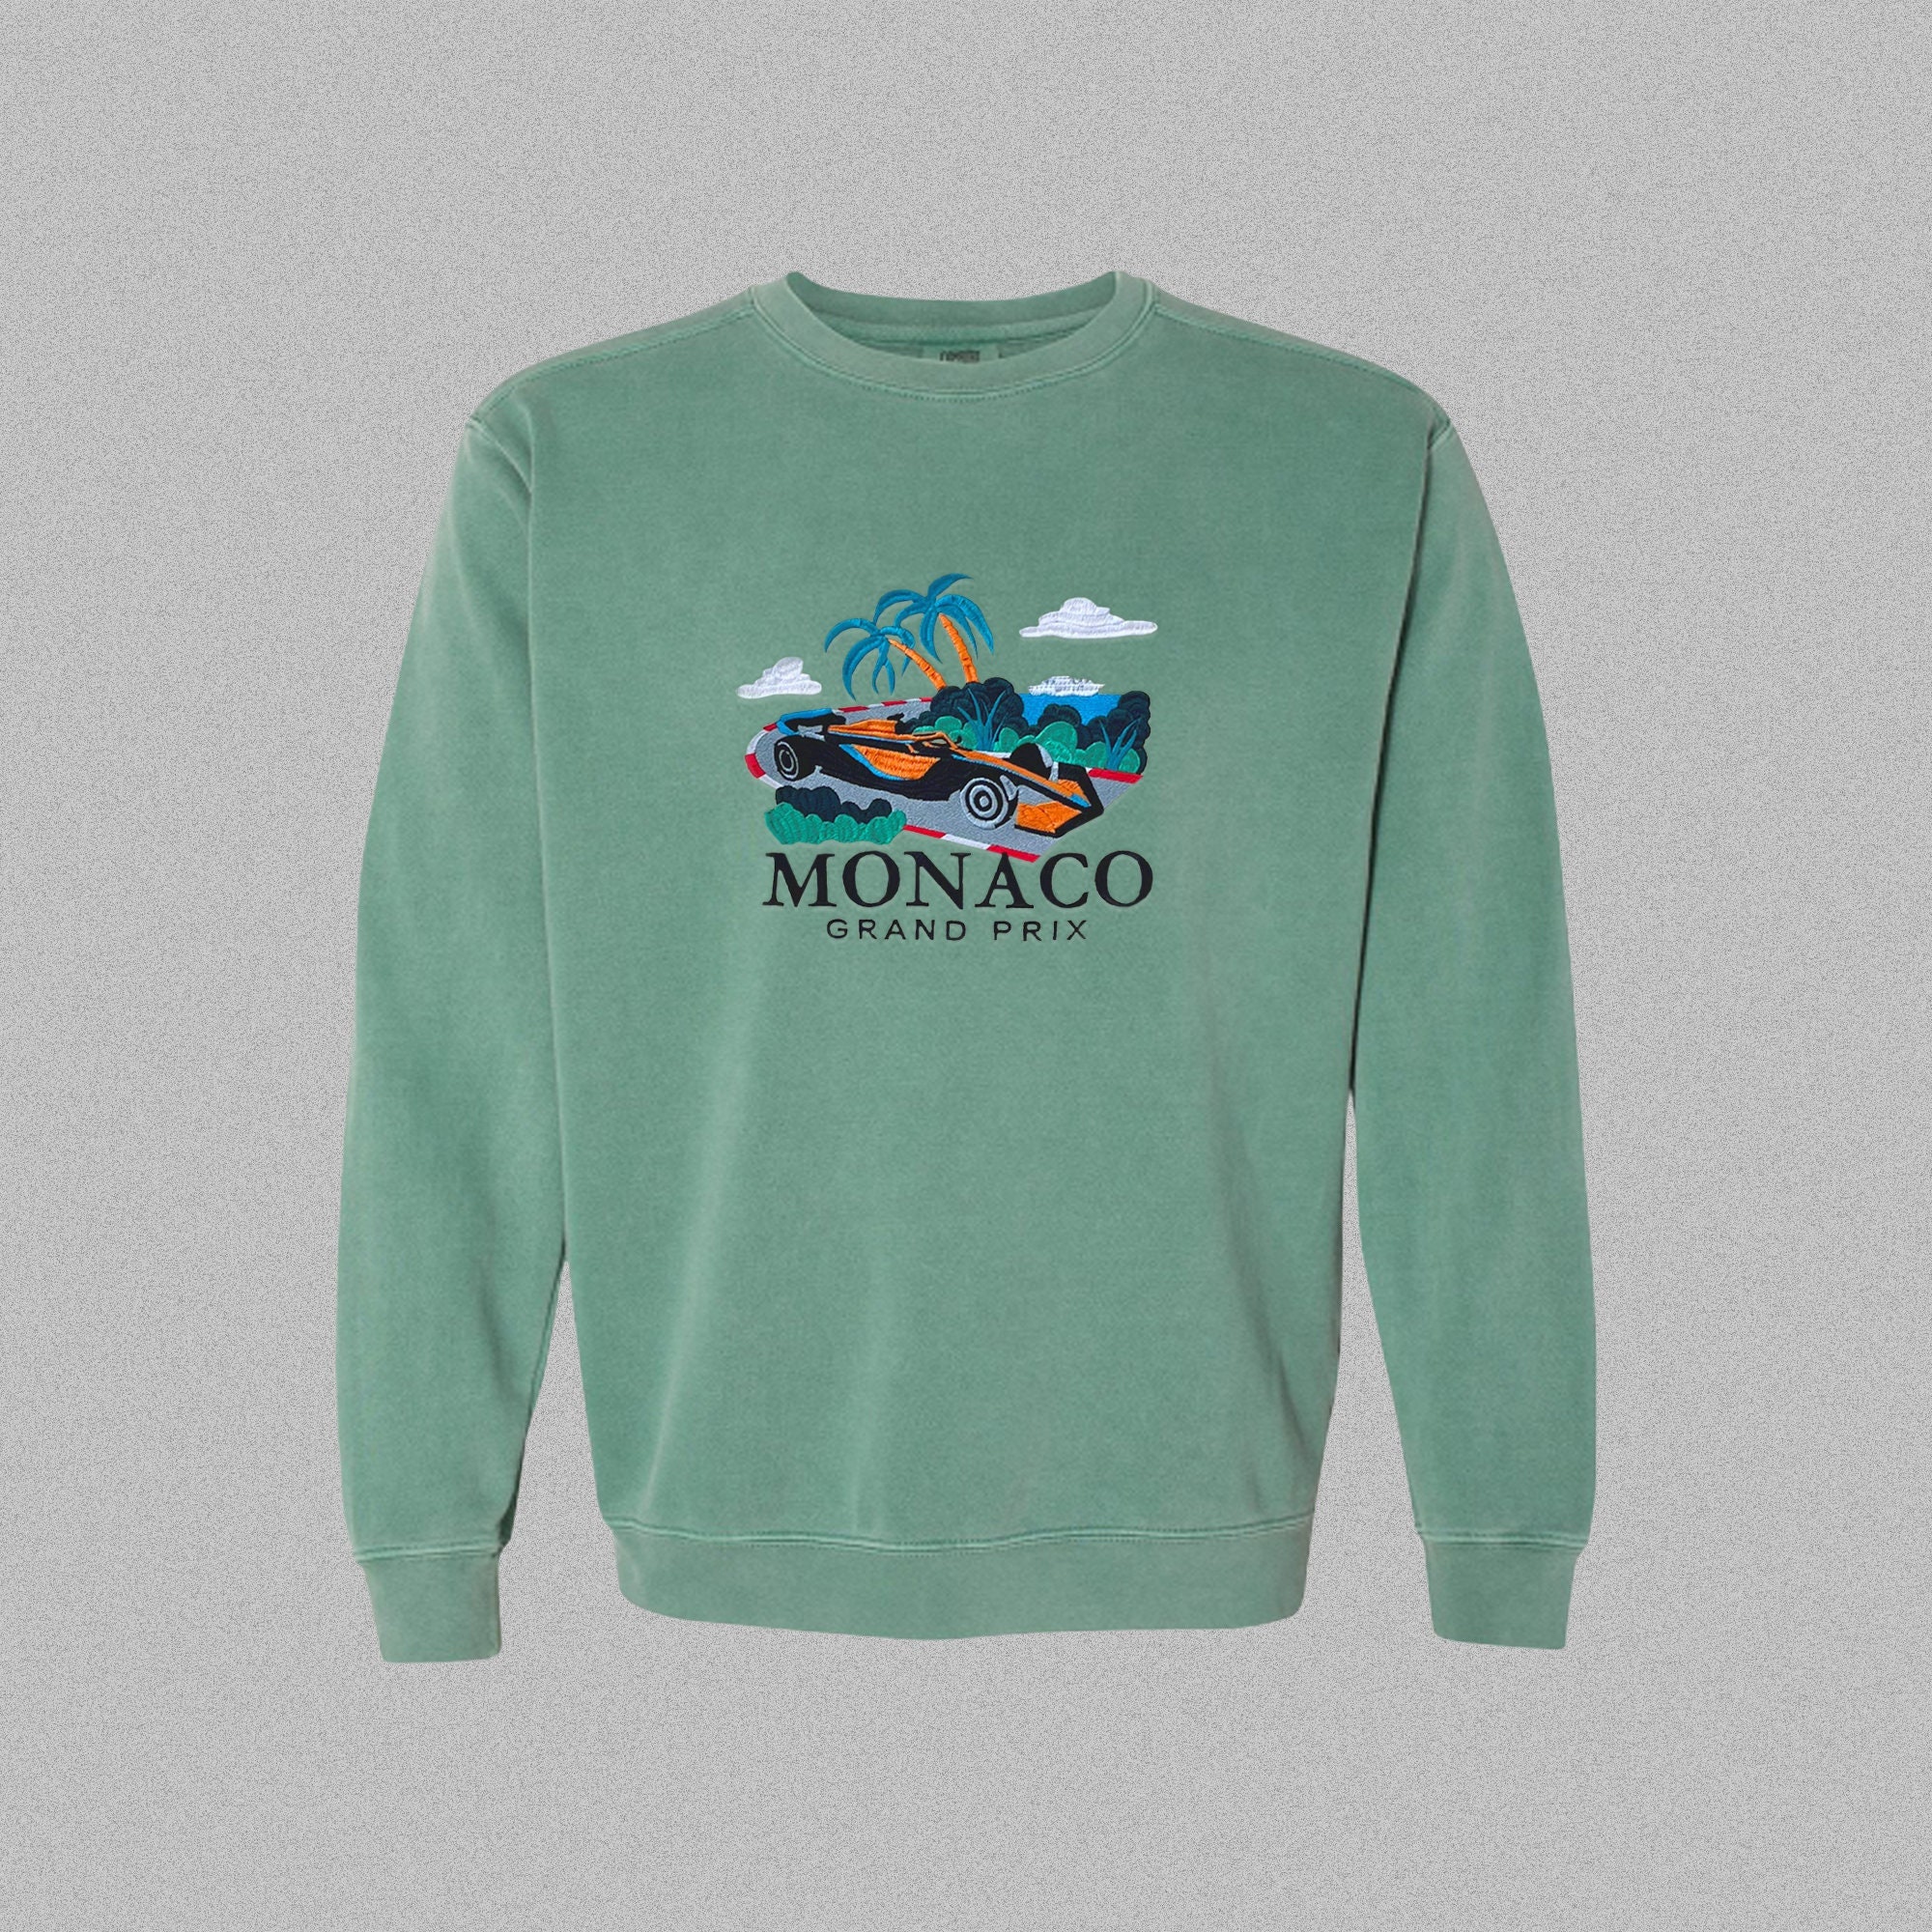 Monaco Racing Sweatshirt Light Green sold by Carlos Ochoa | SKU ...